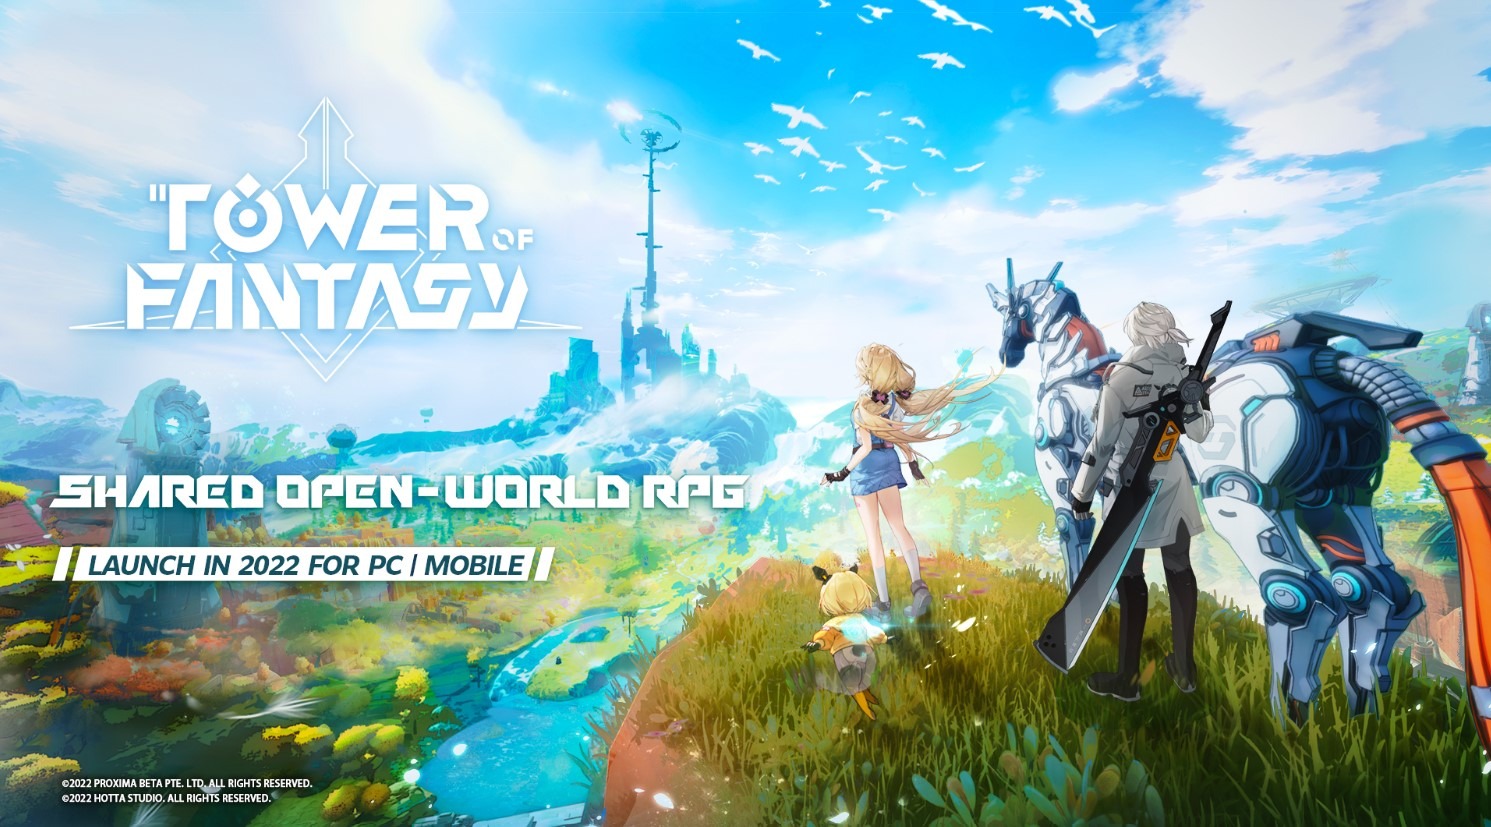 Tower of Fantasy closed beta